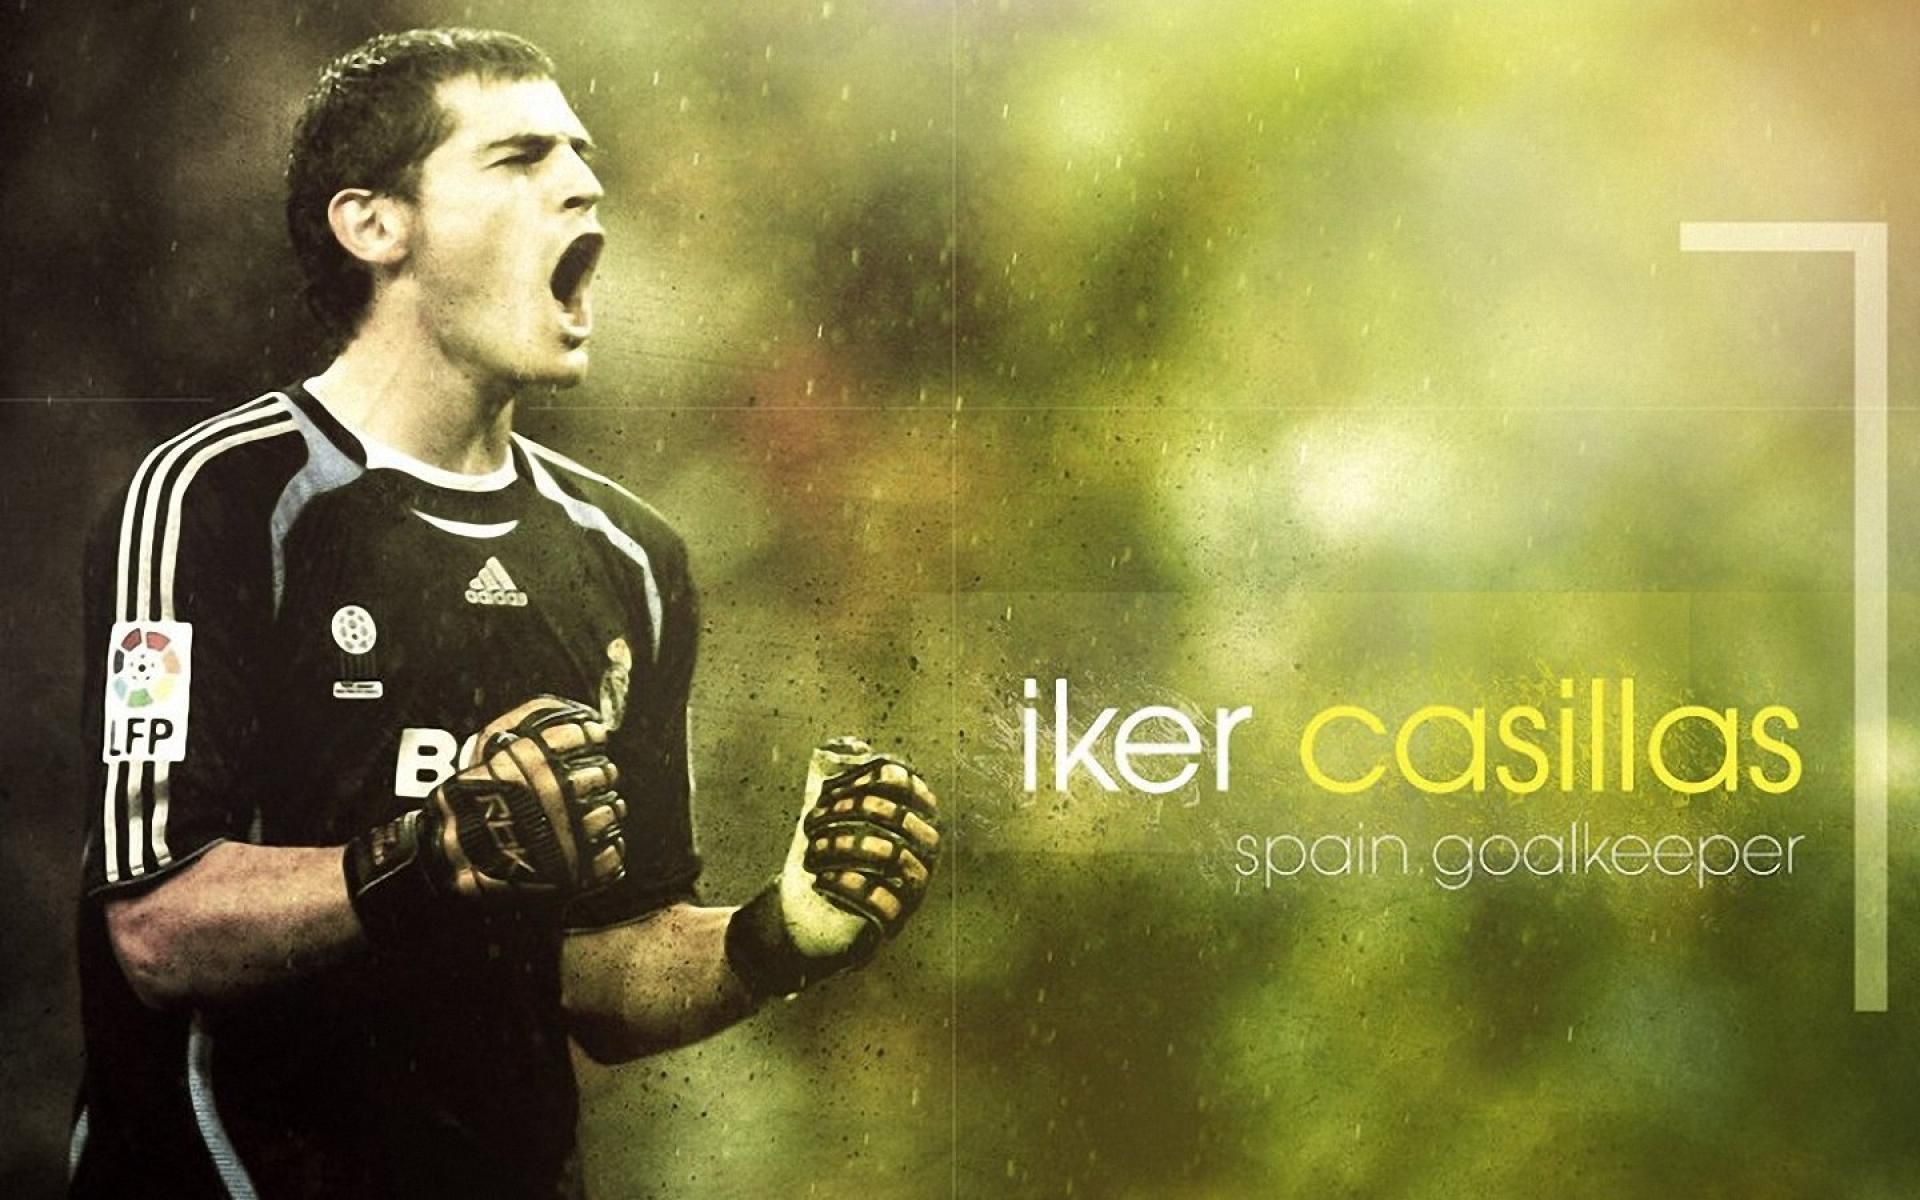 Iker Casillas. image for desktop and wallpaper. Iker casillas, HD image, Image